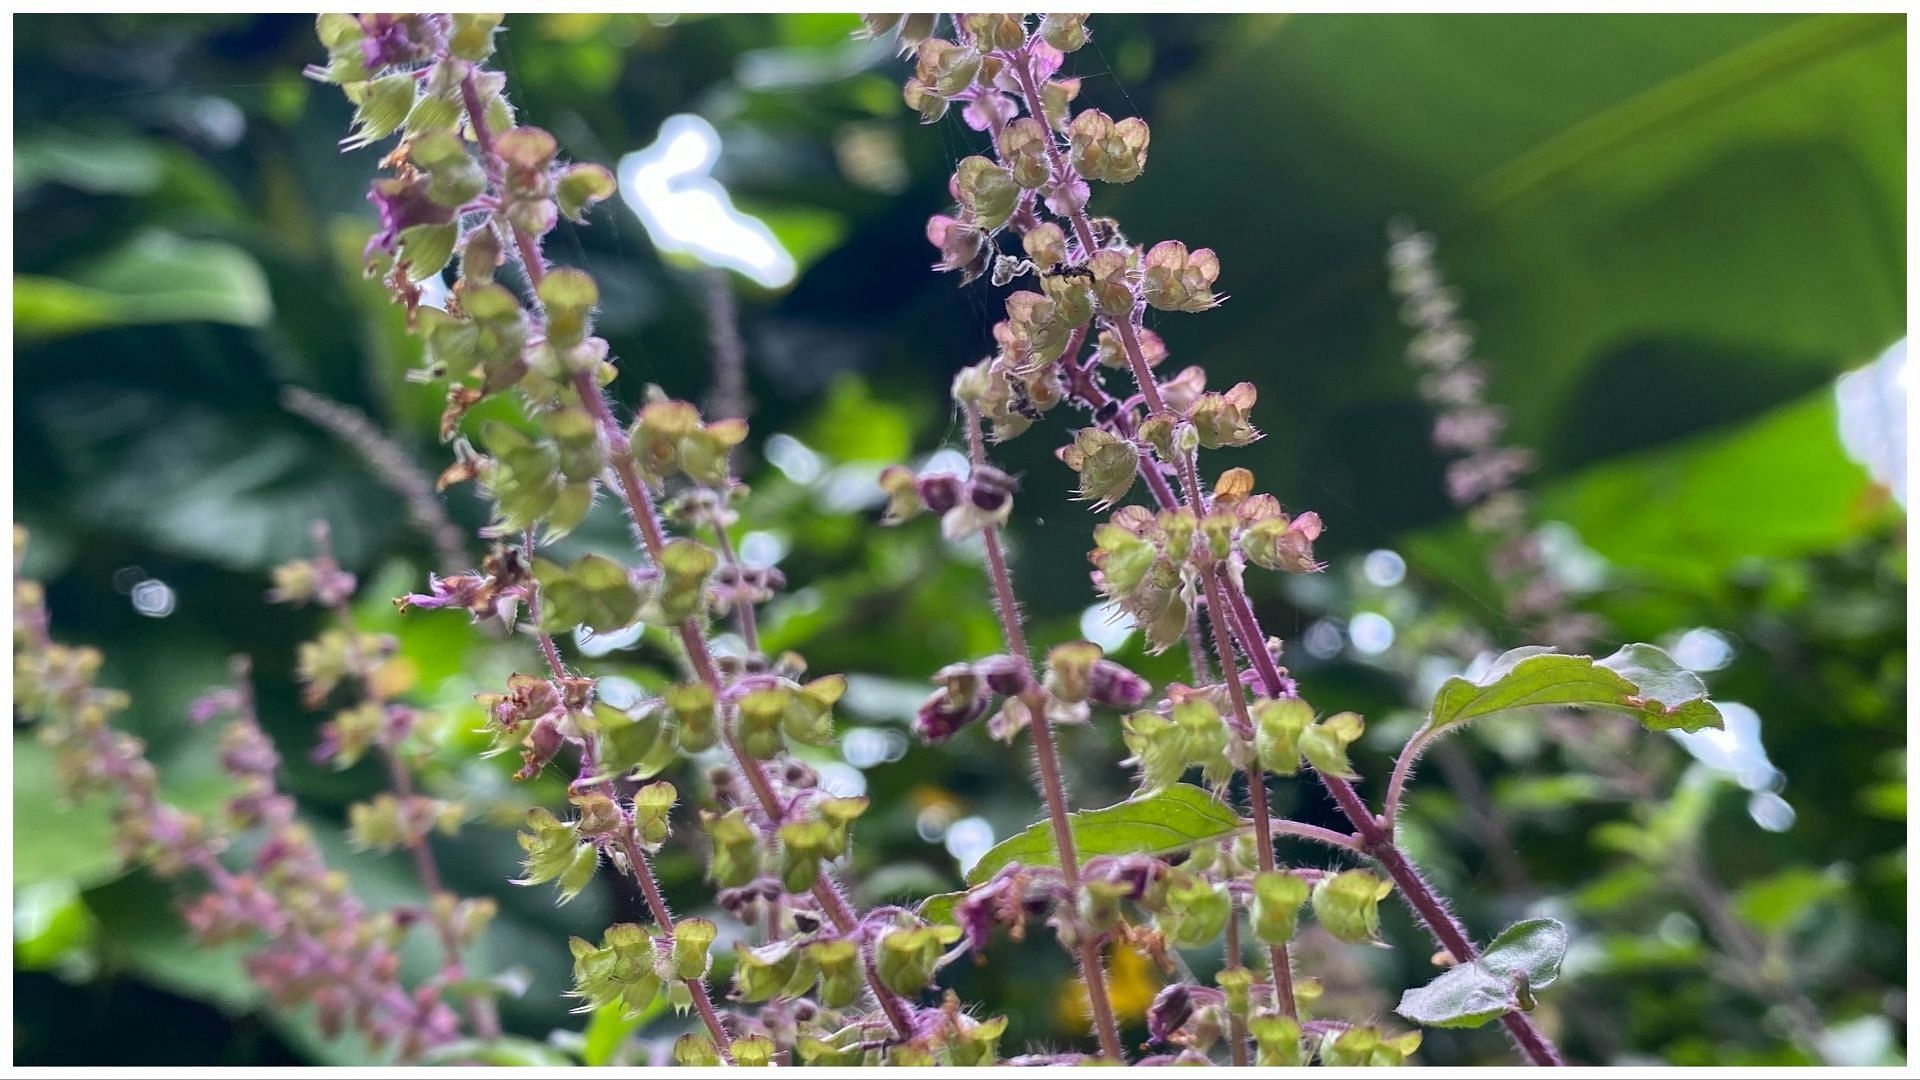 This herb helps improving immunity. (Image via Unsplash/ Liz Pullan Pattathy)